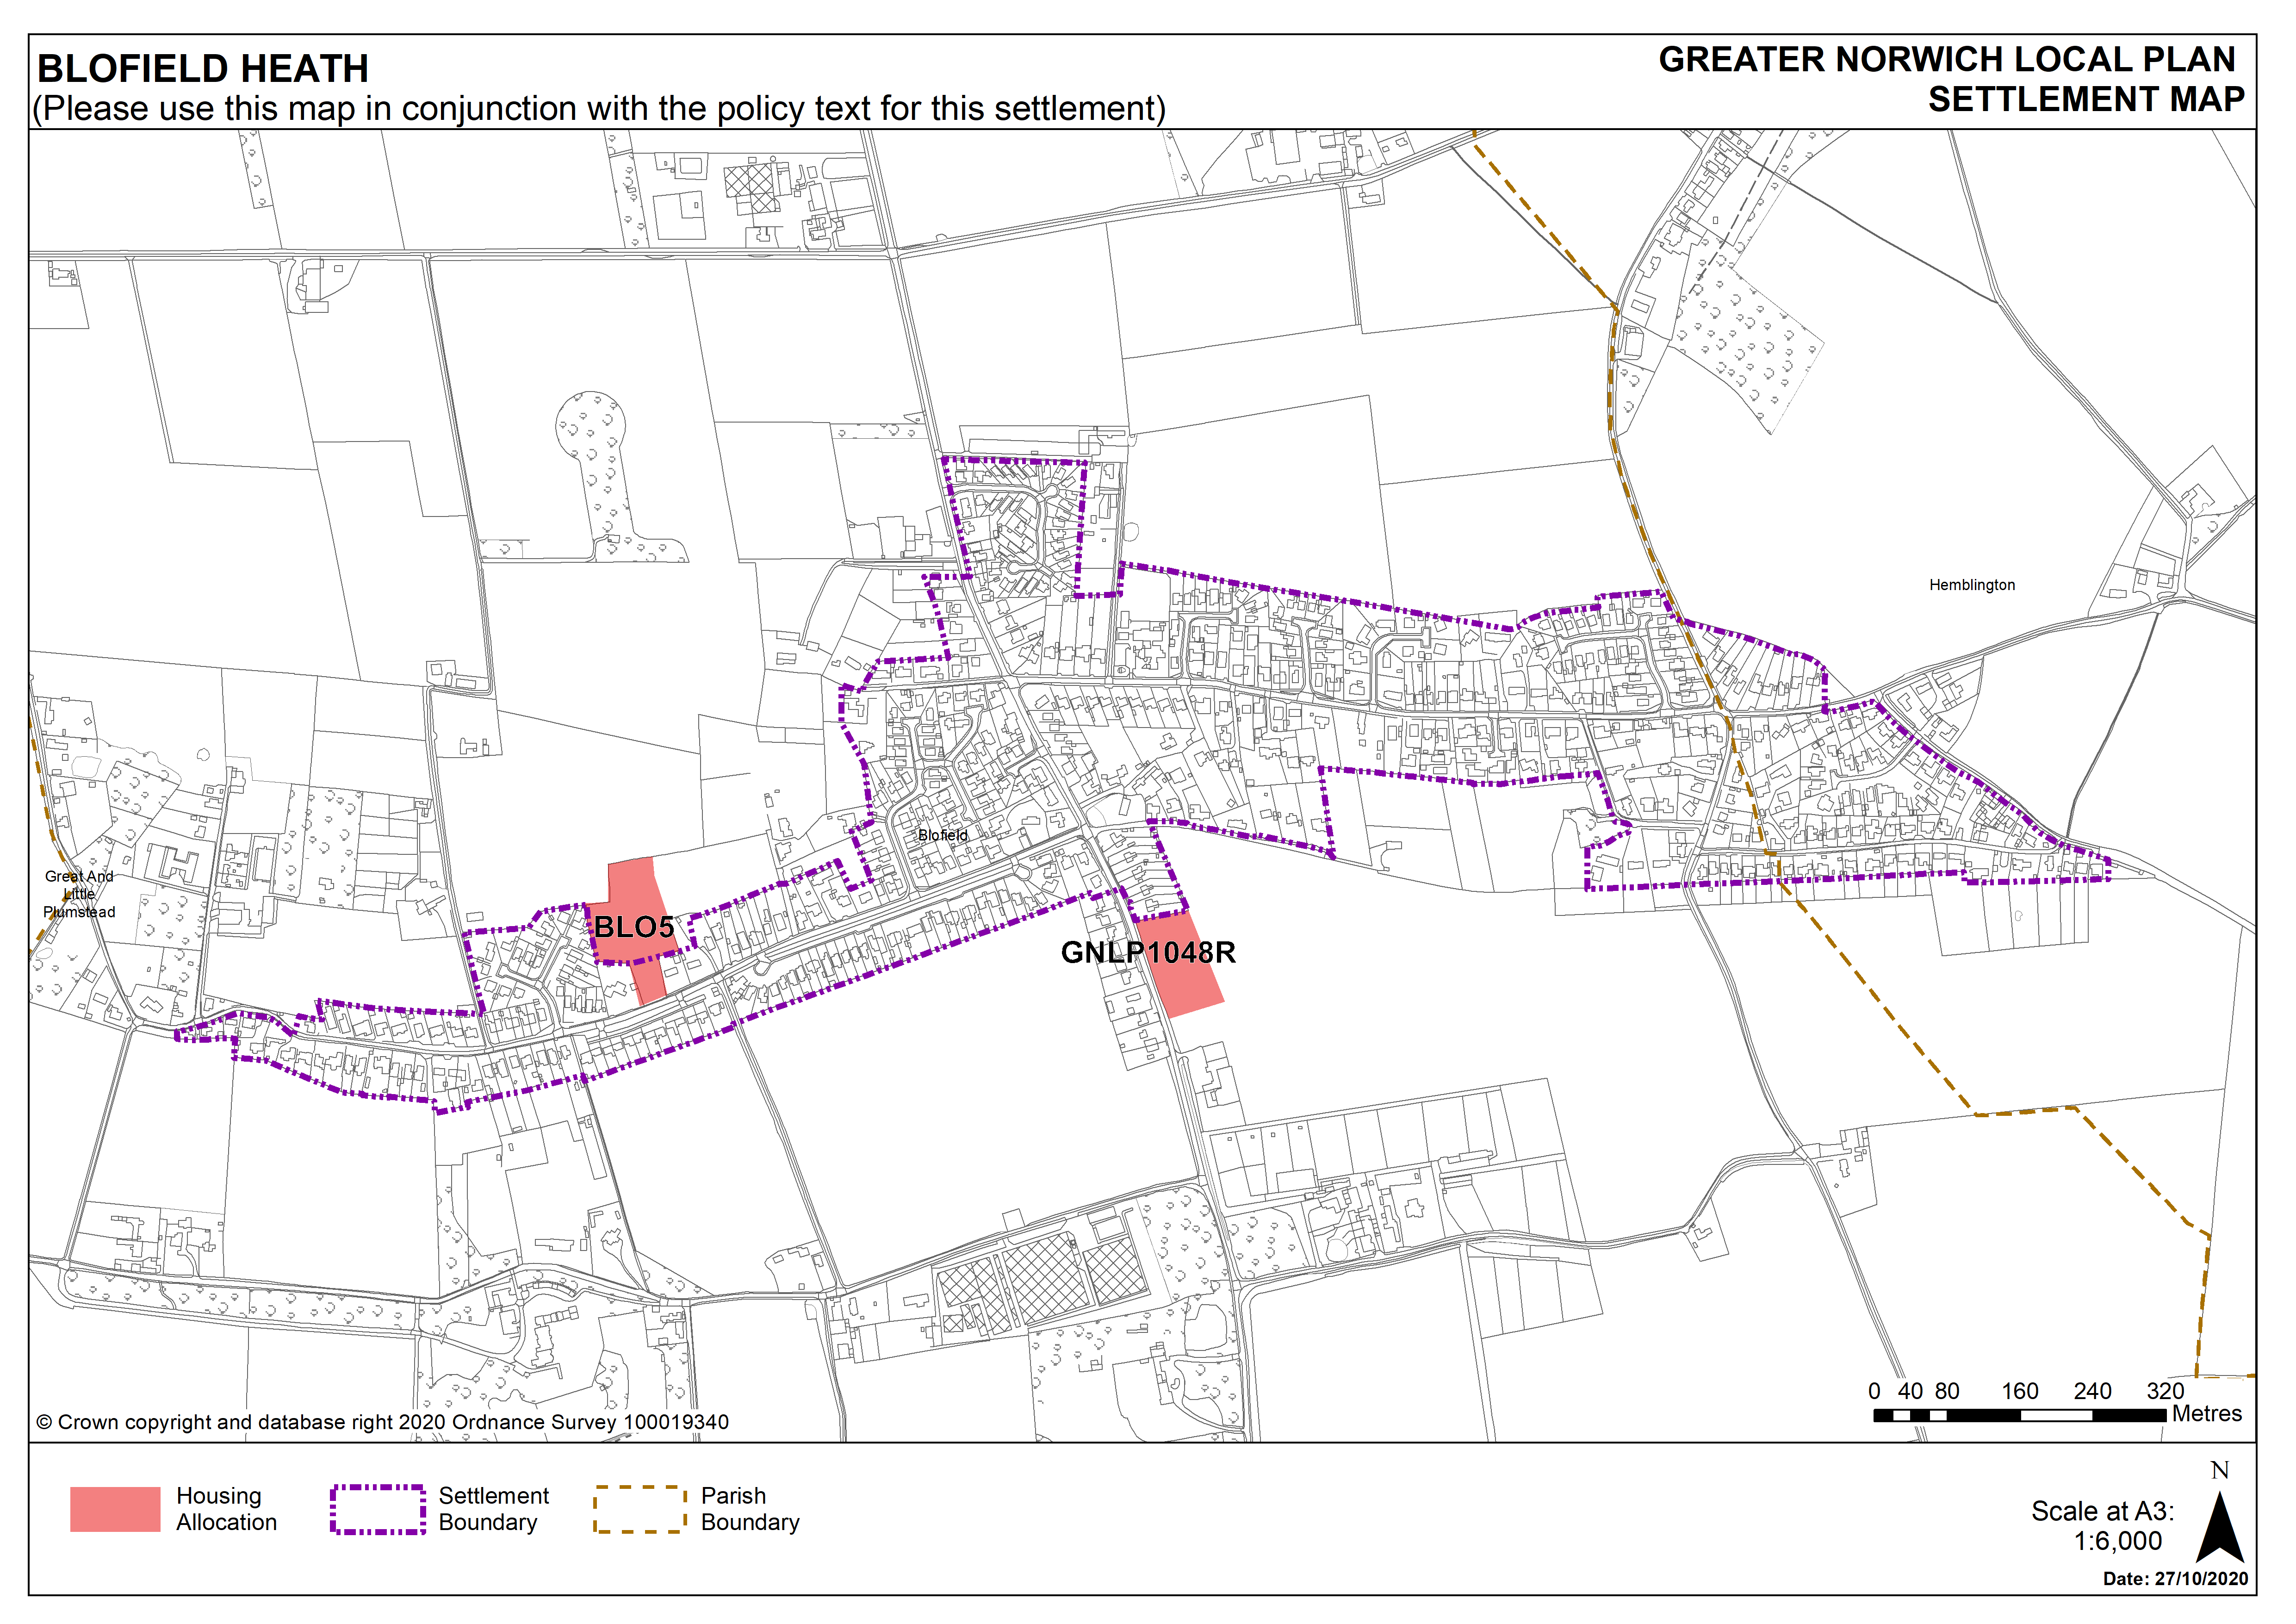 Blofield Heath Settlement Map